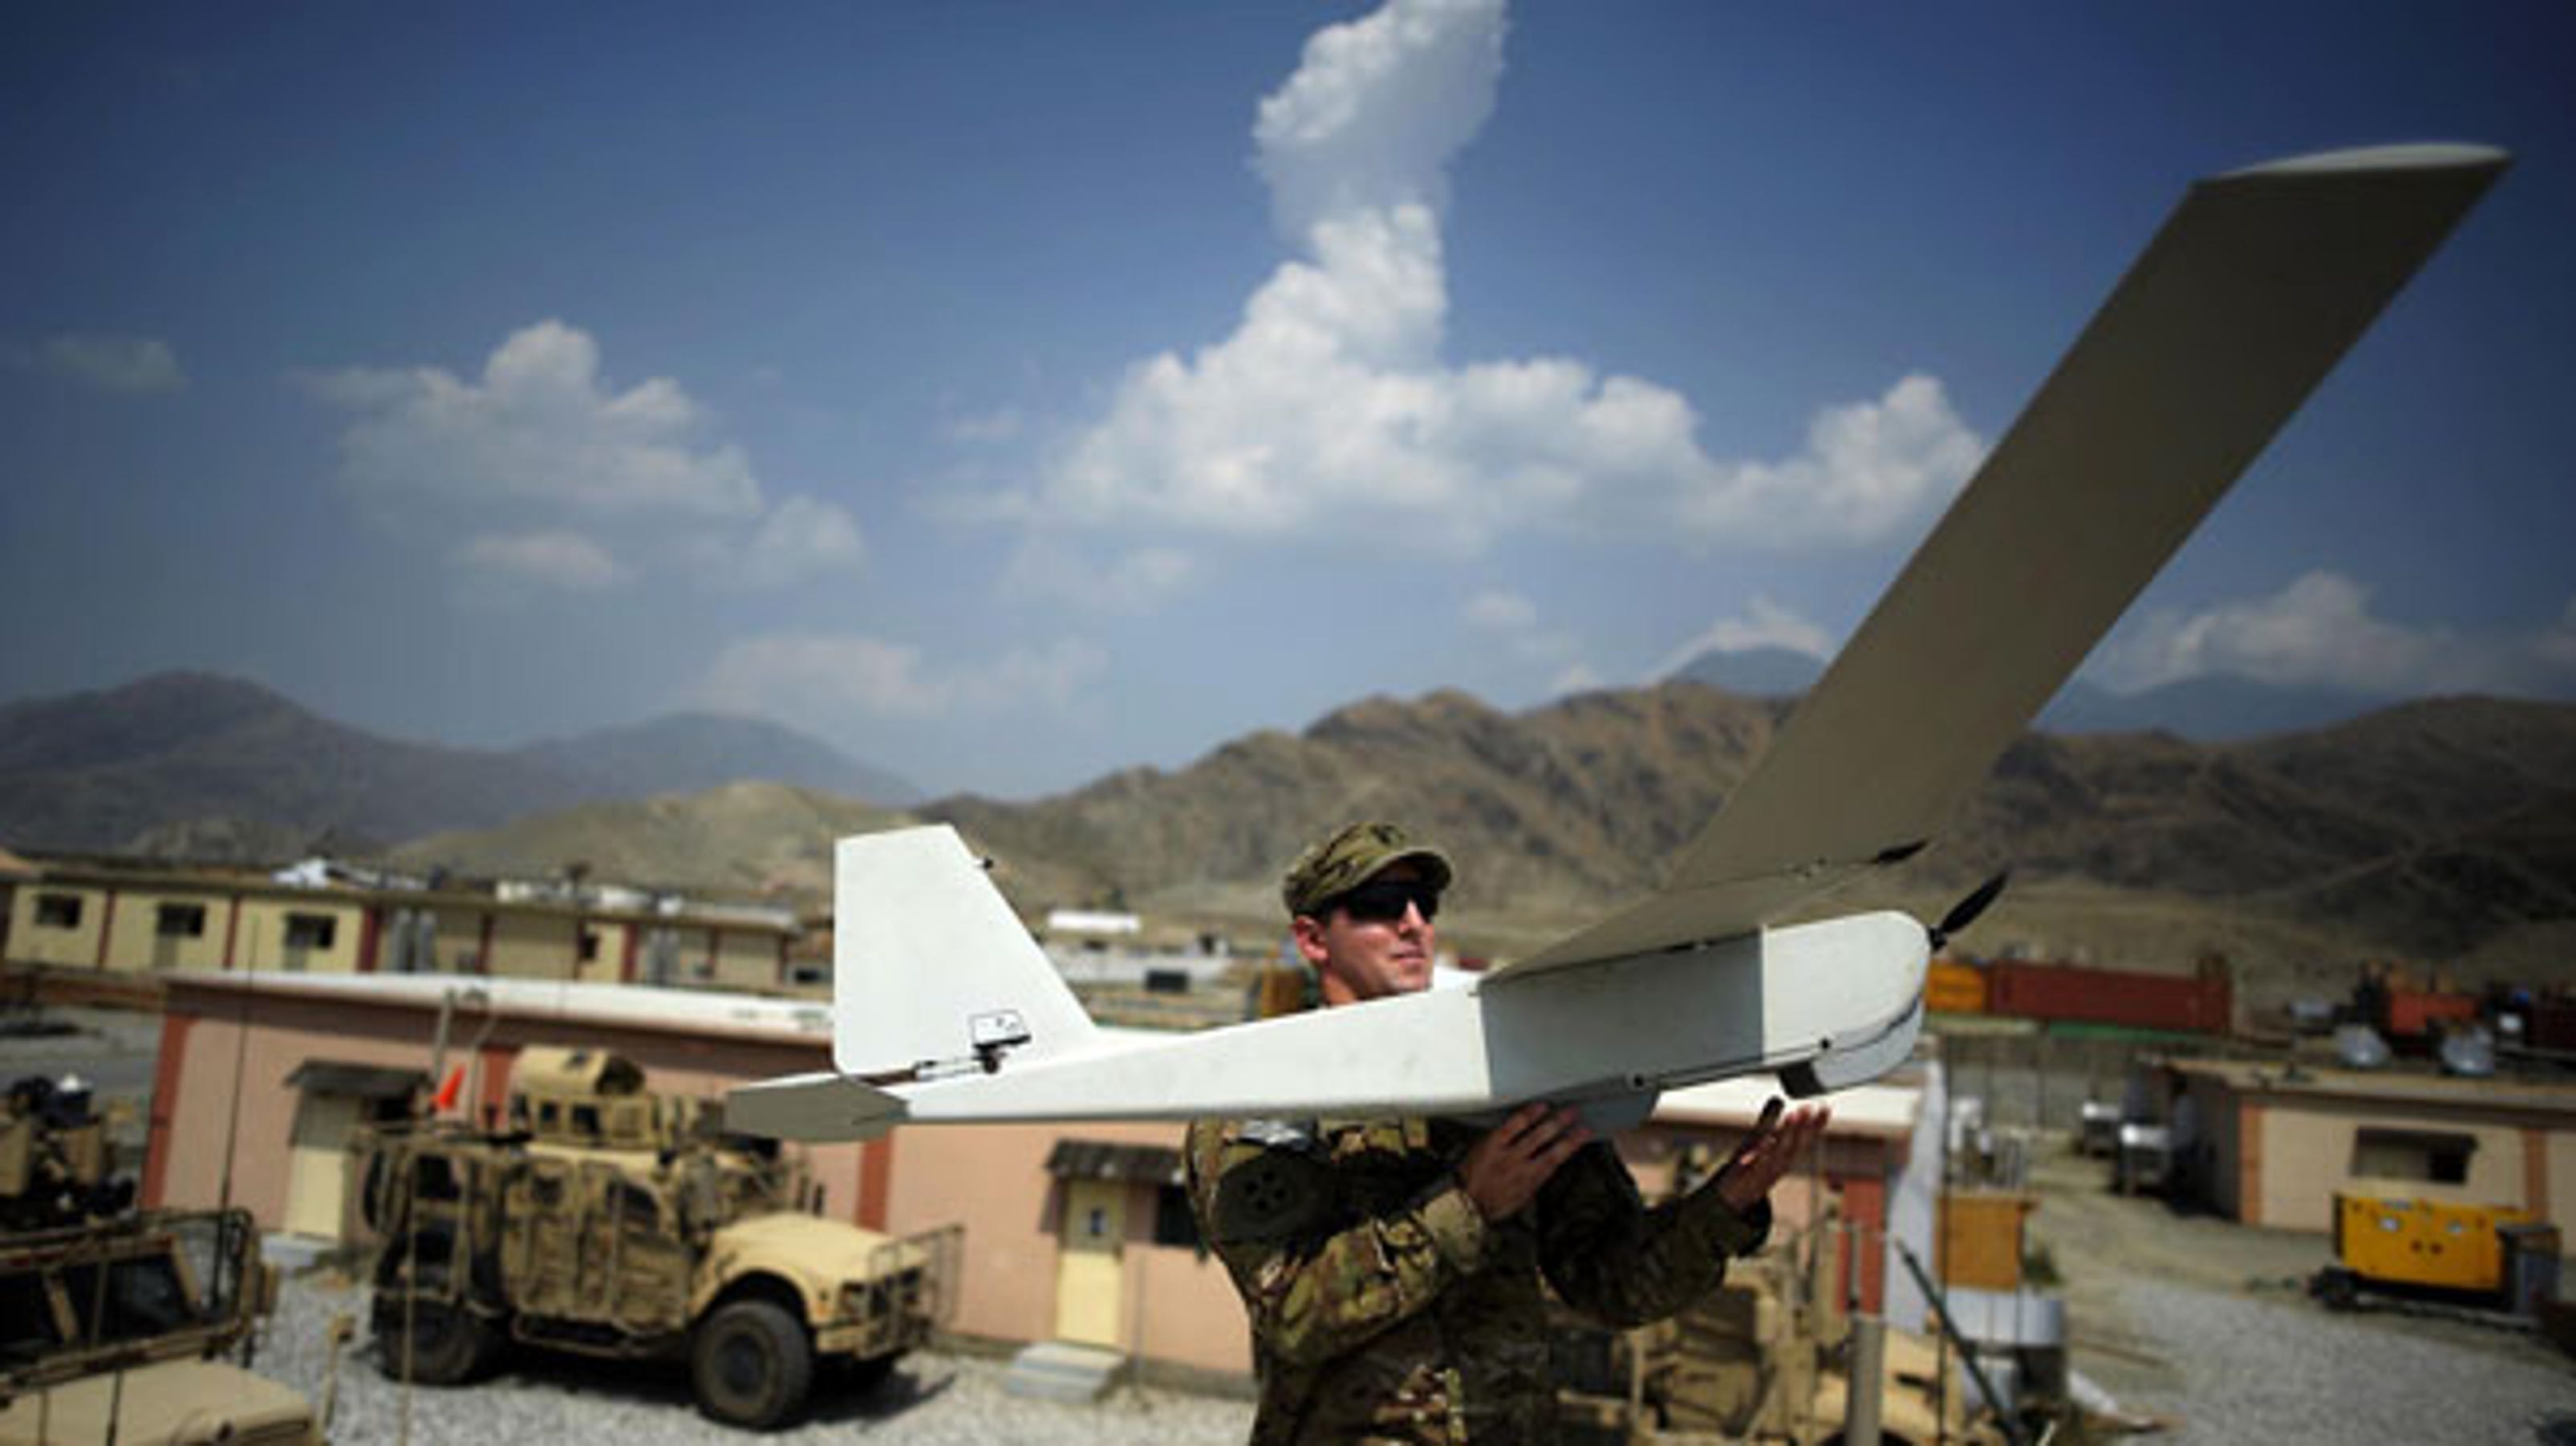 Ups Delivers Government Drone To Random Person